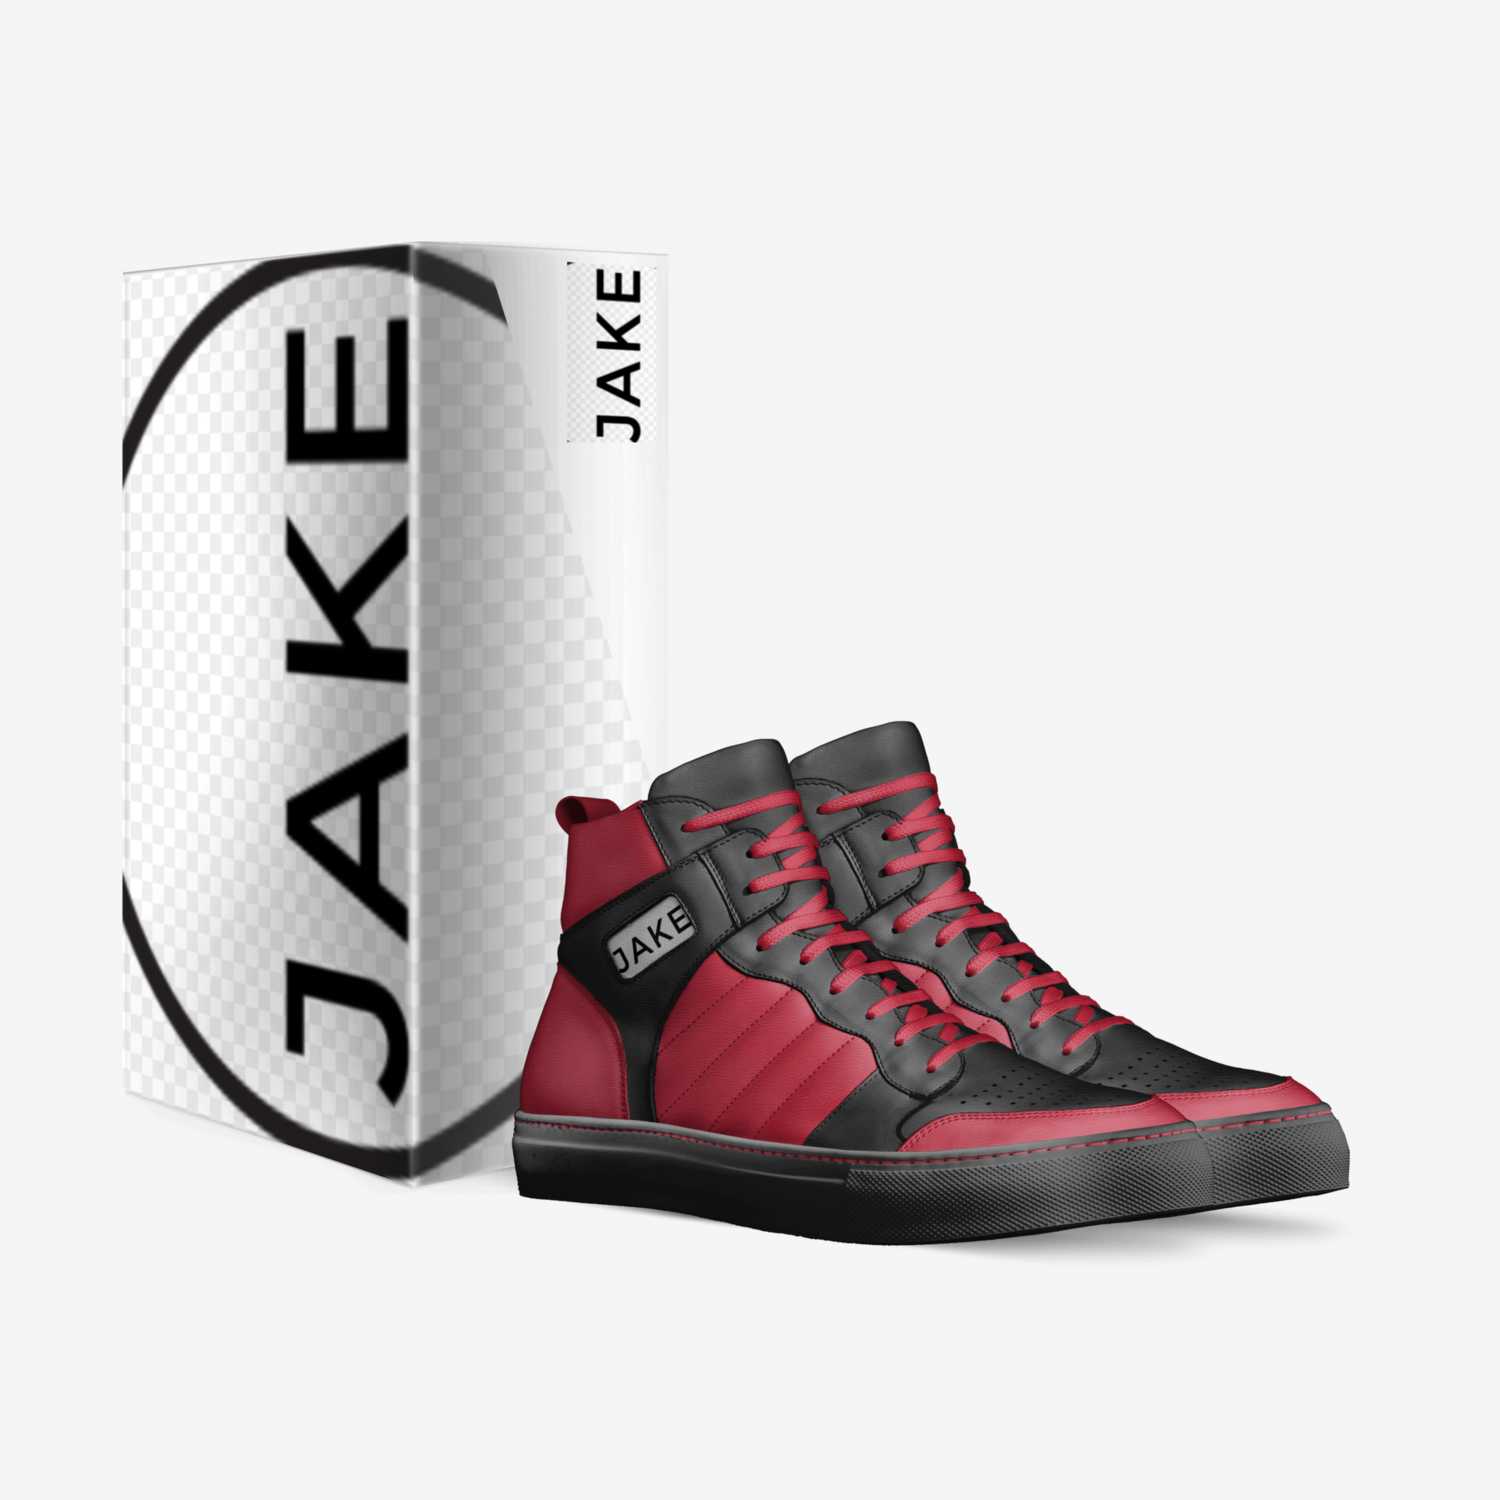 Jake custom made in Italy shoes by Ayrehaud Jones | Box view